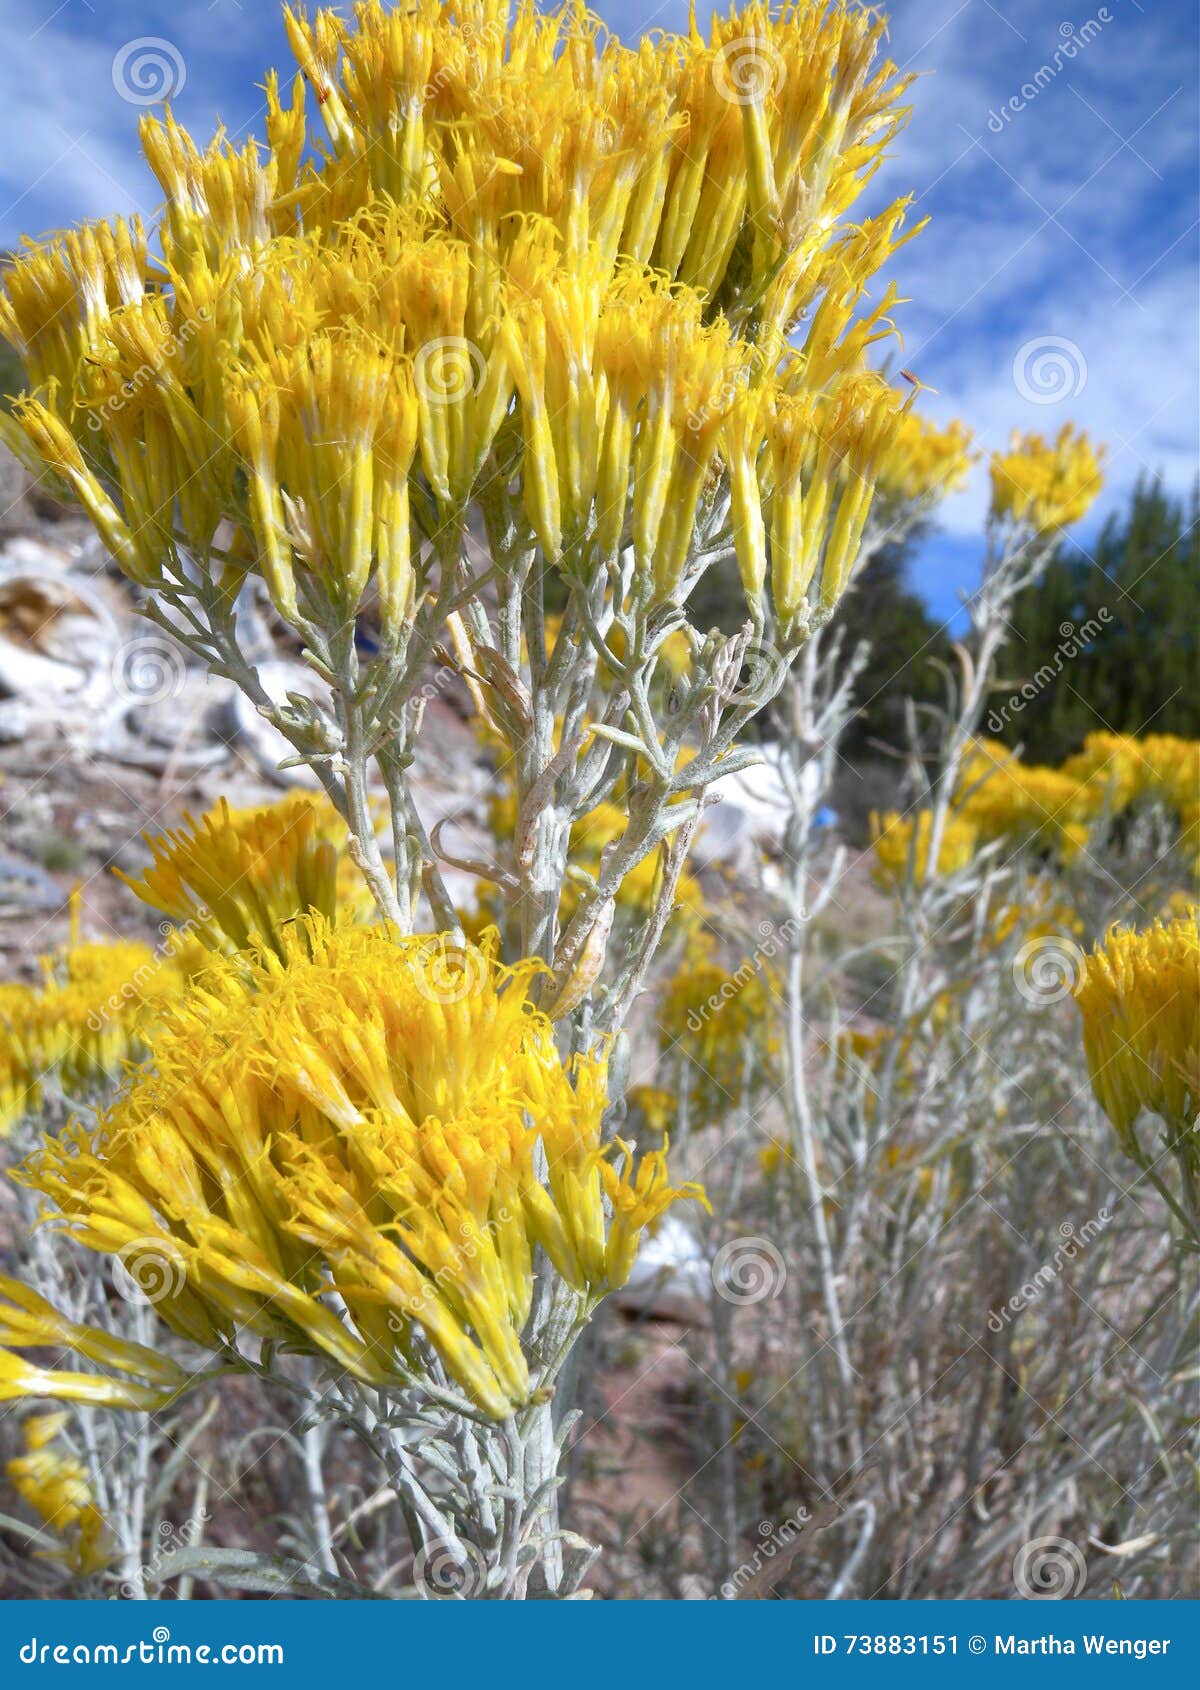 Flowering Sage Brush Stock Image Image Of Artemisia 73883151